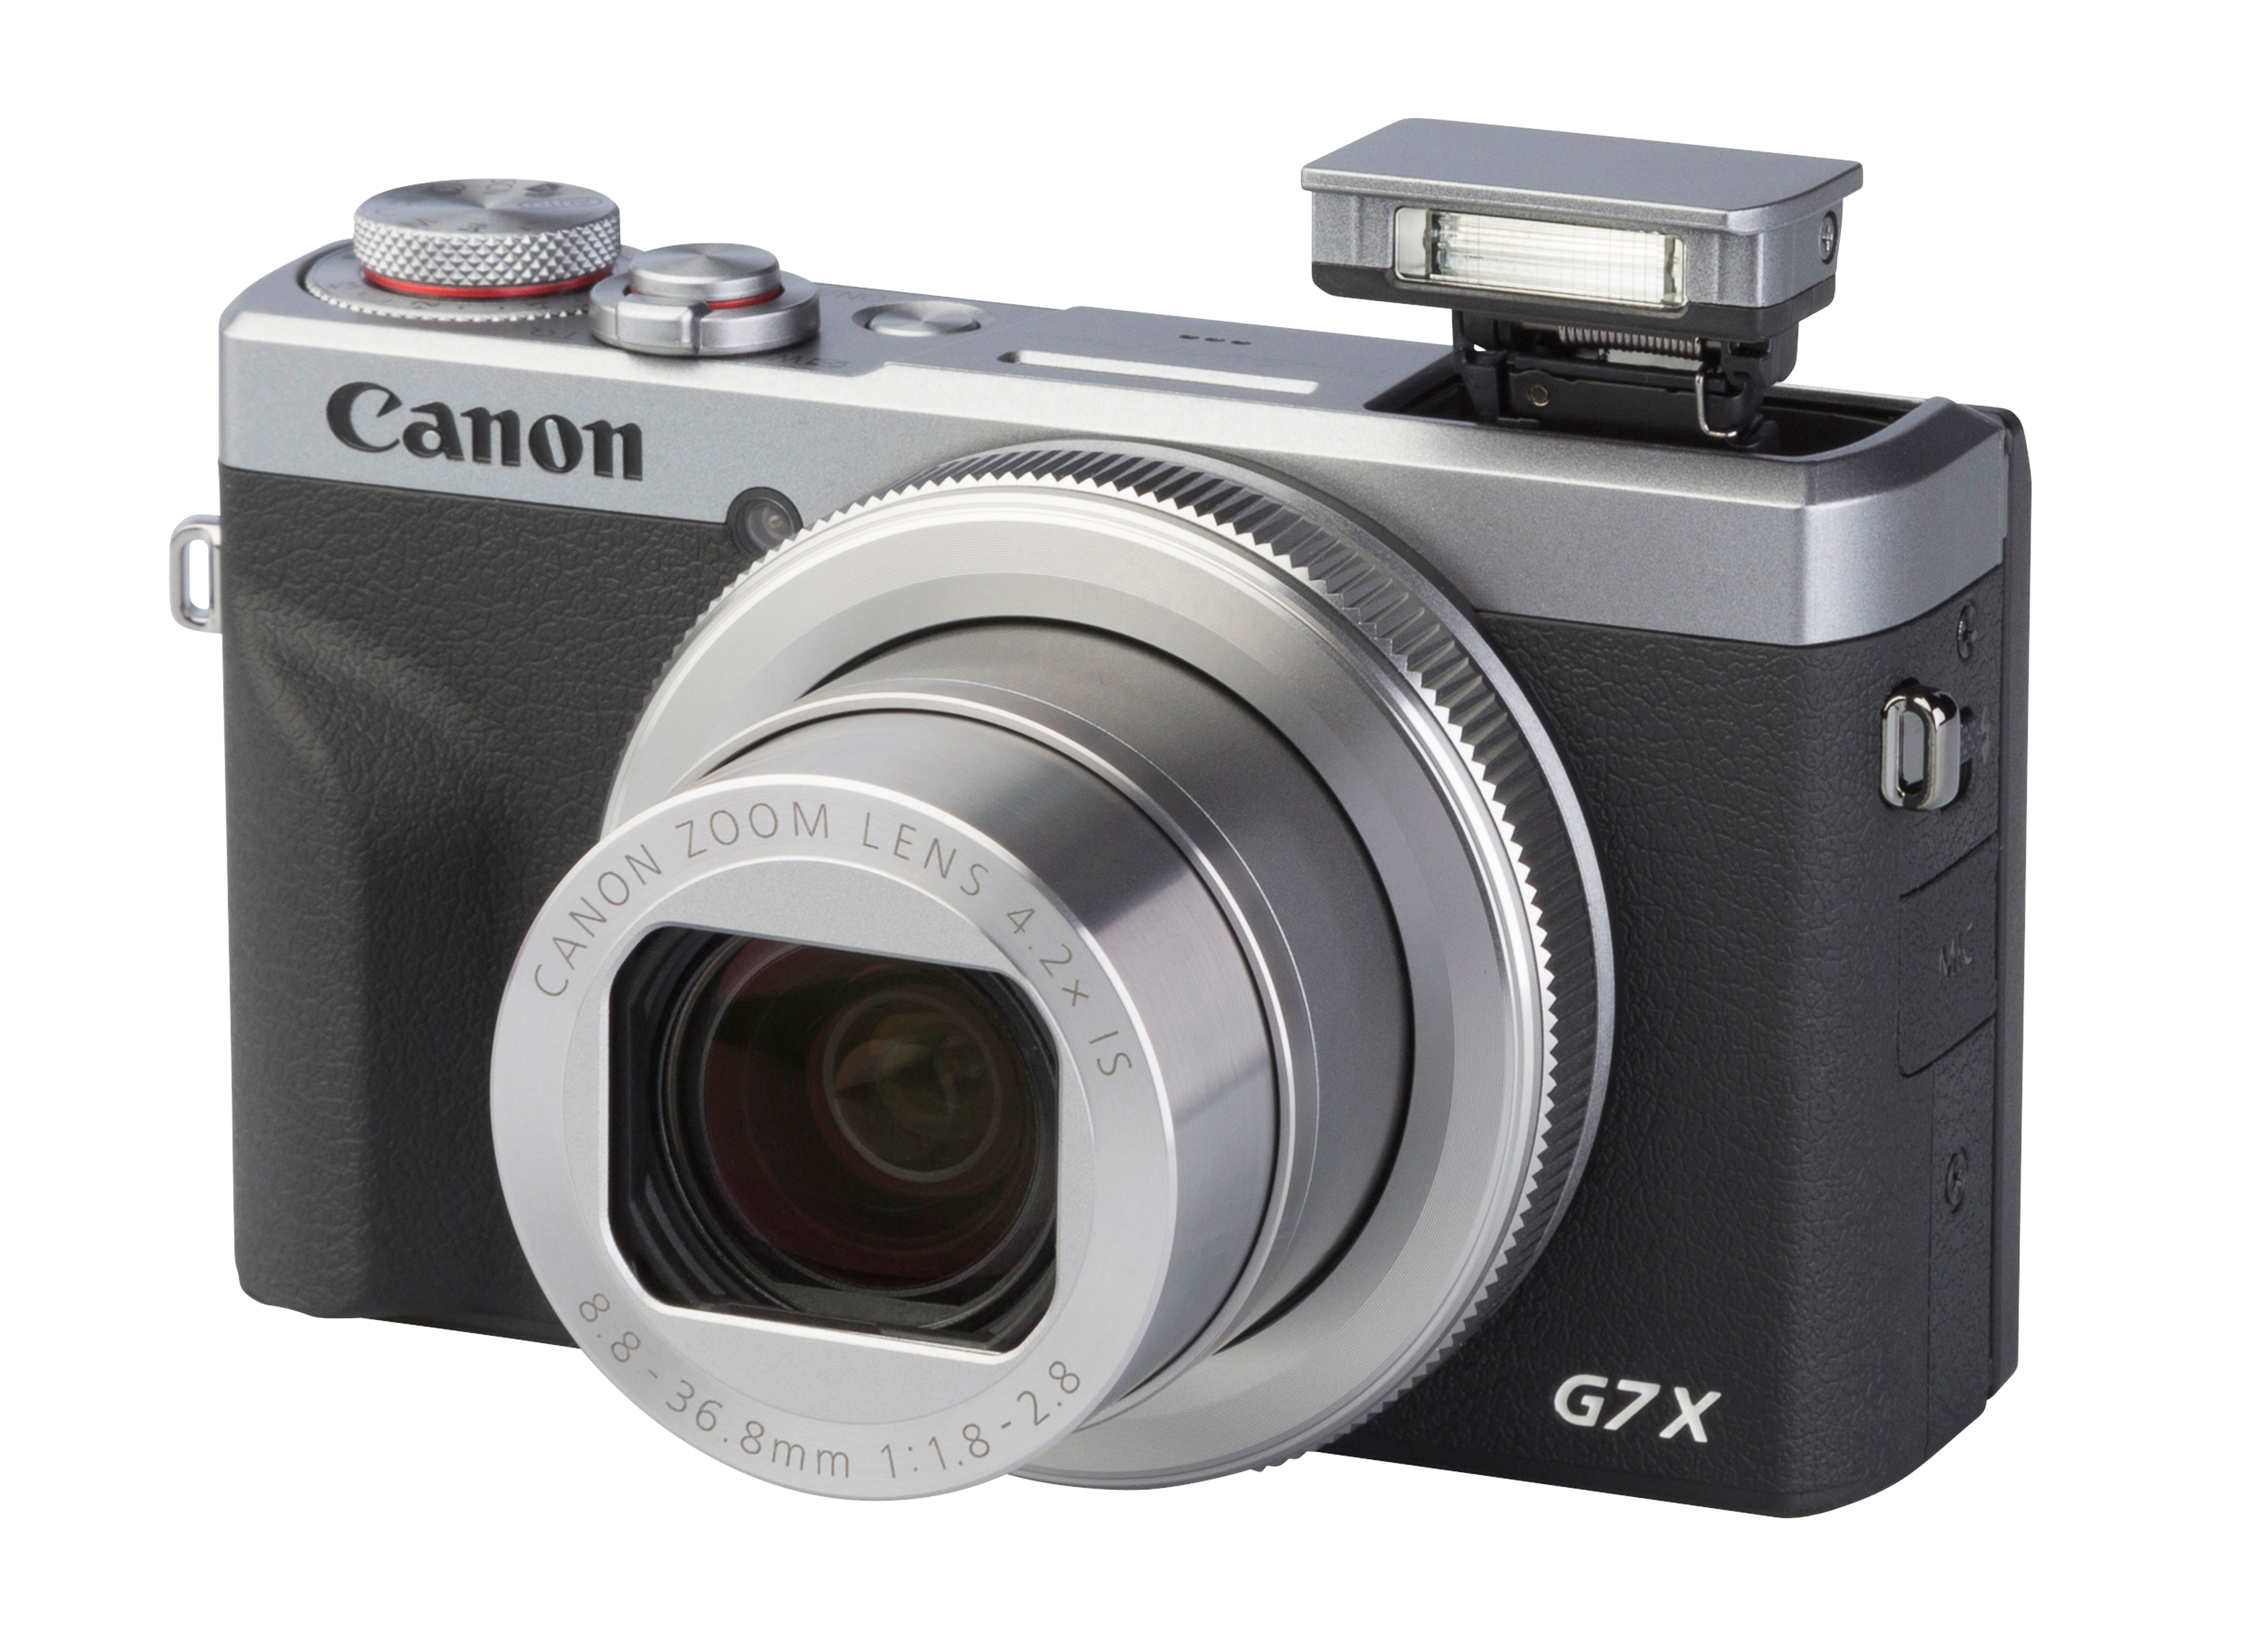 Canon Powershot G7 X Camera Review